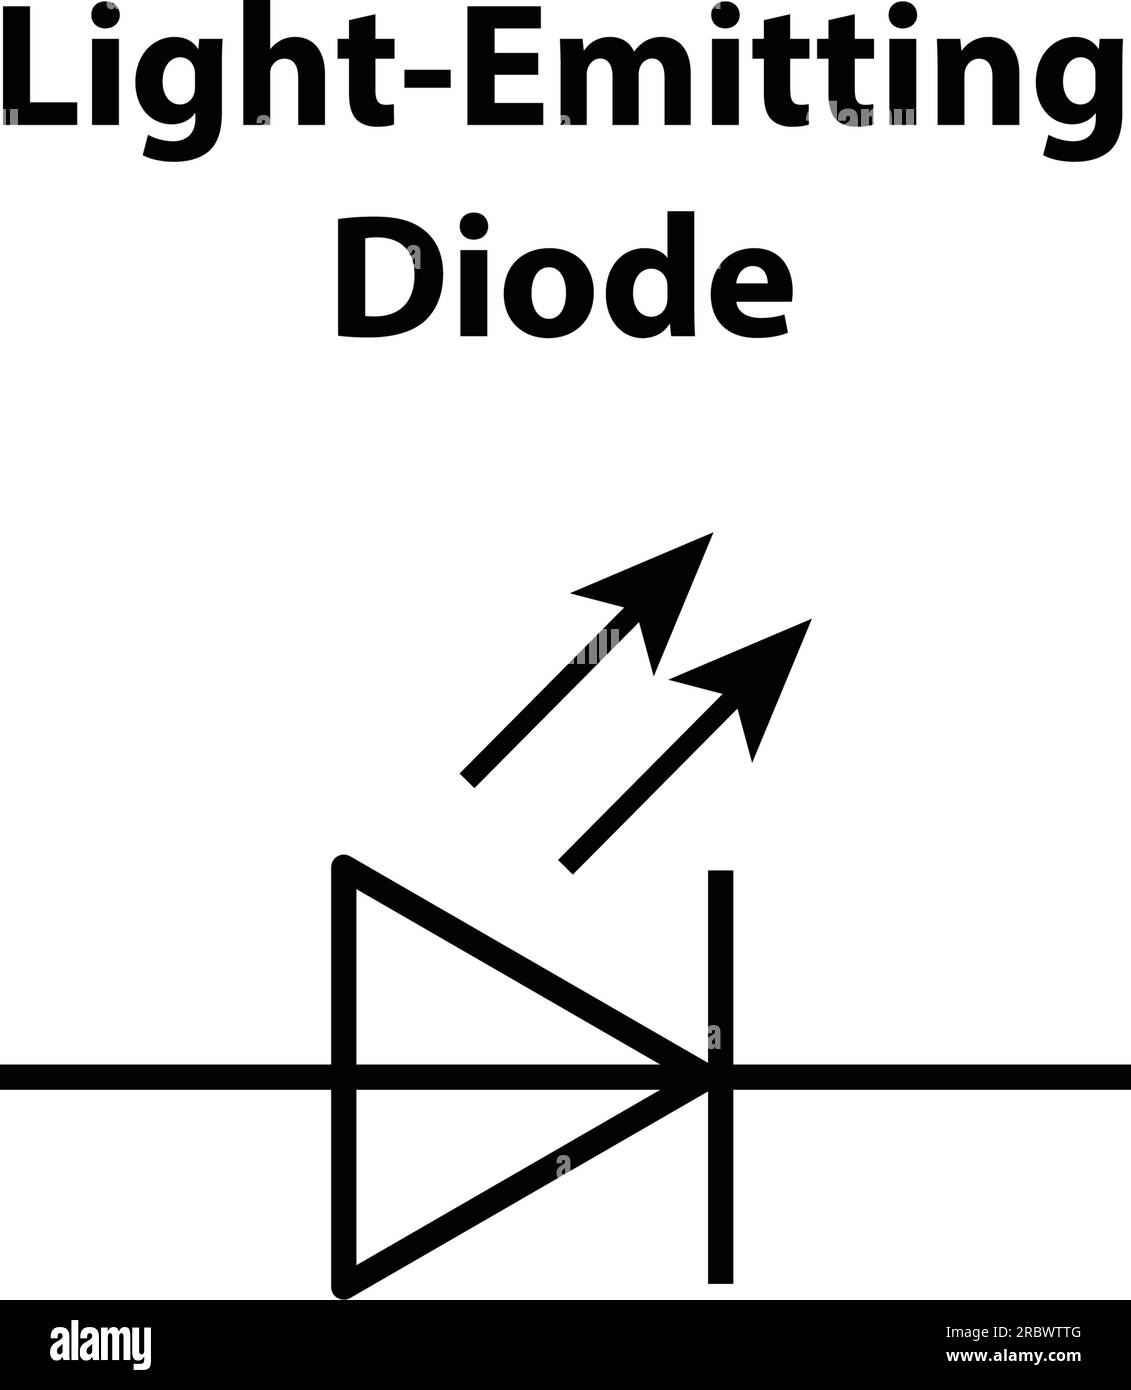 Light-Emitting Diode. electronic symbol. Illustration of basic circuit symbols. Electrical symbols, study content of physics students. Stock Vector